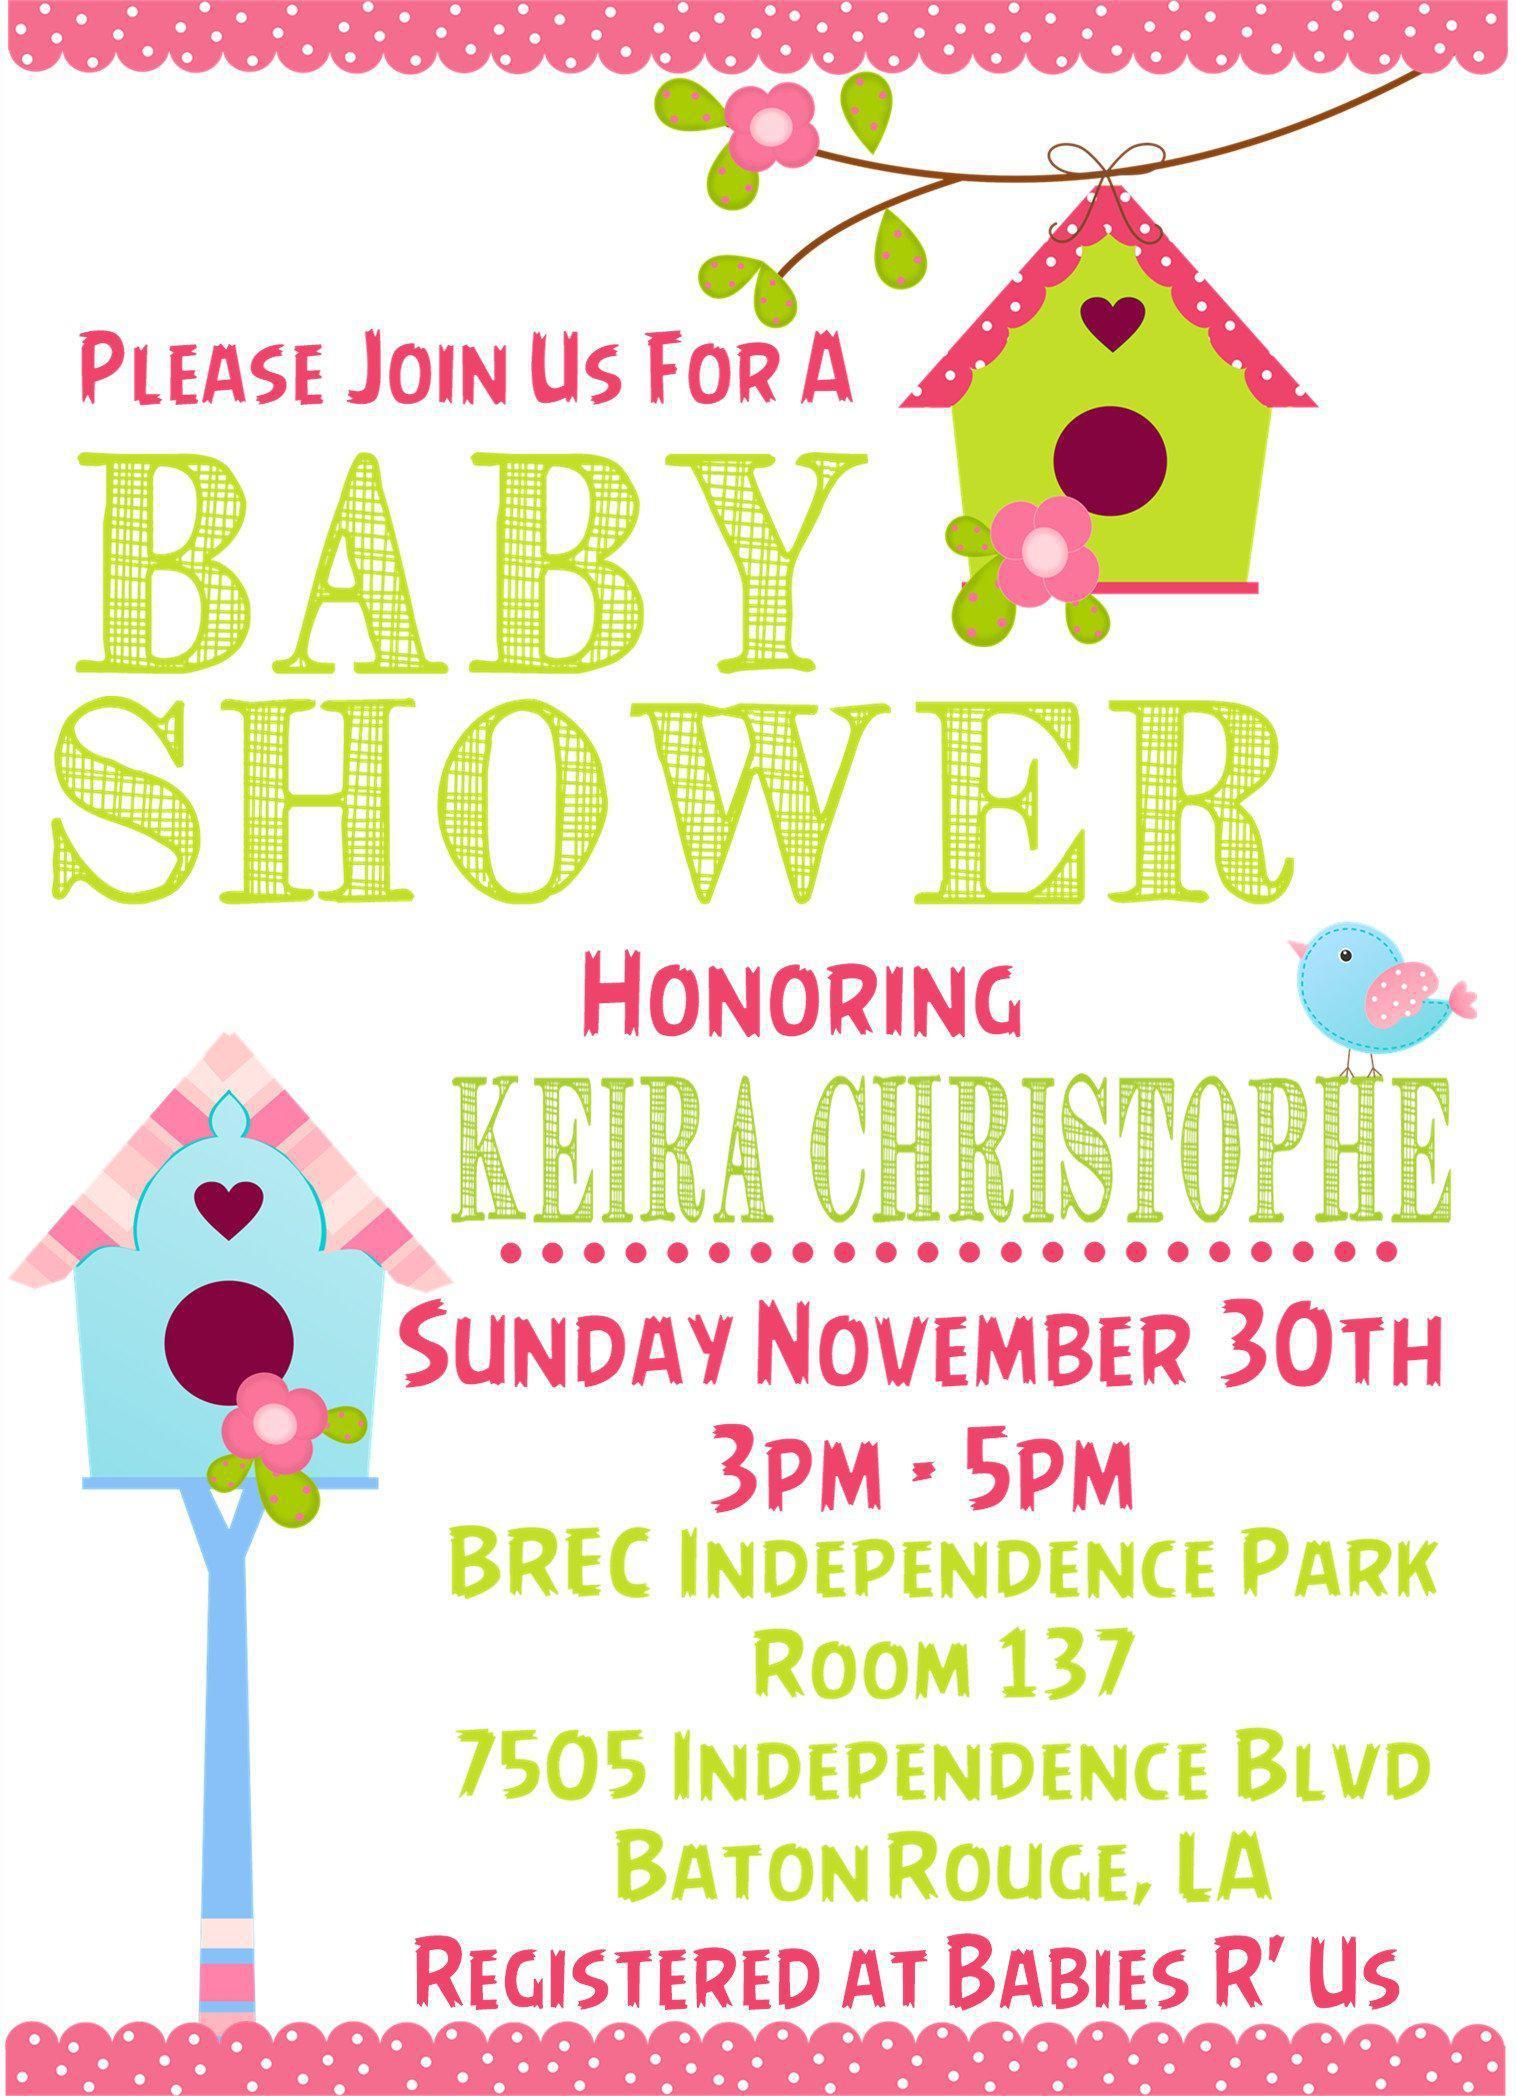 Spring Baby Shower Invitations